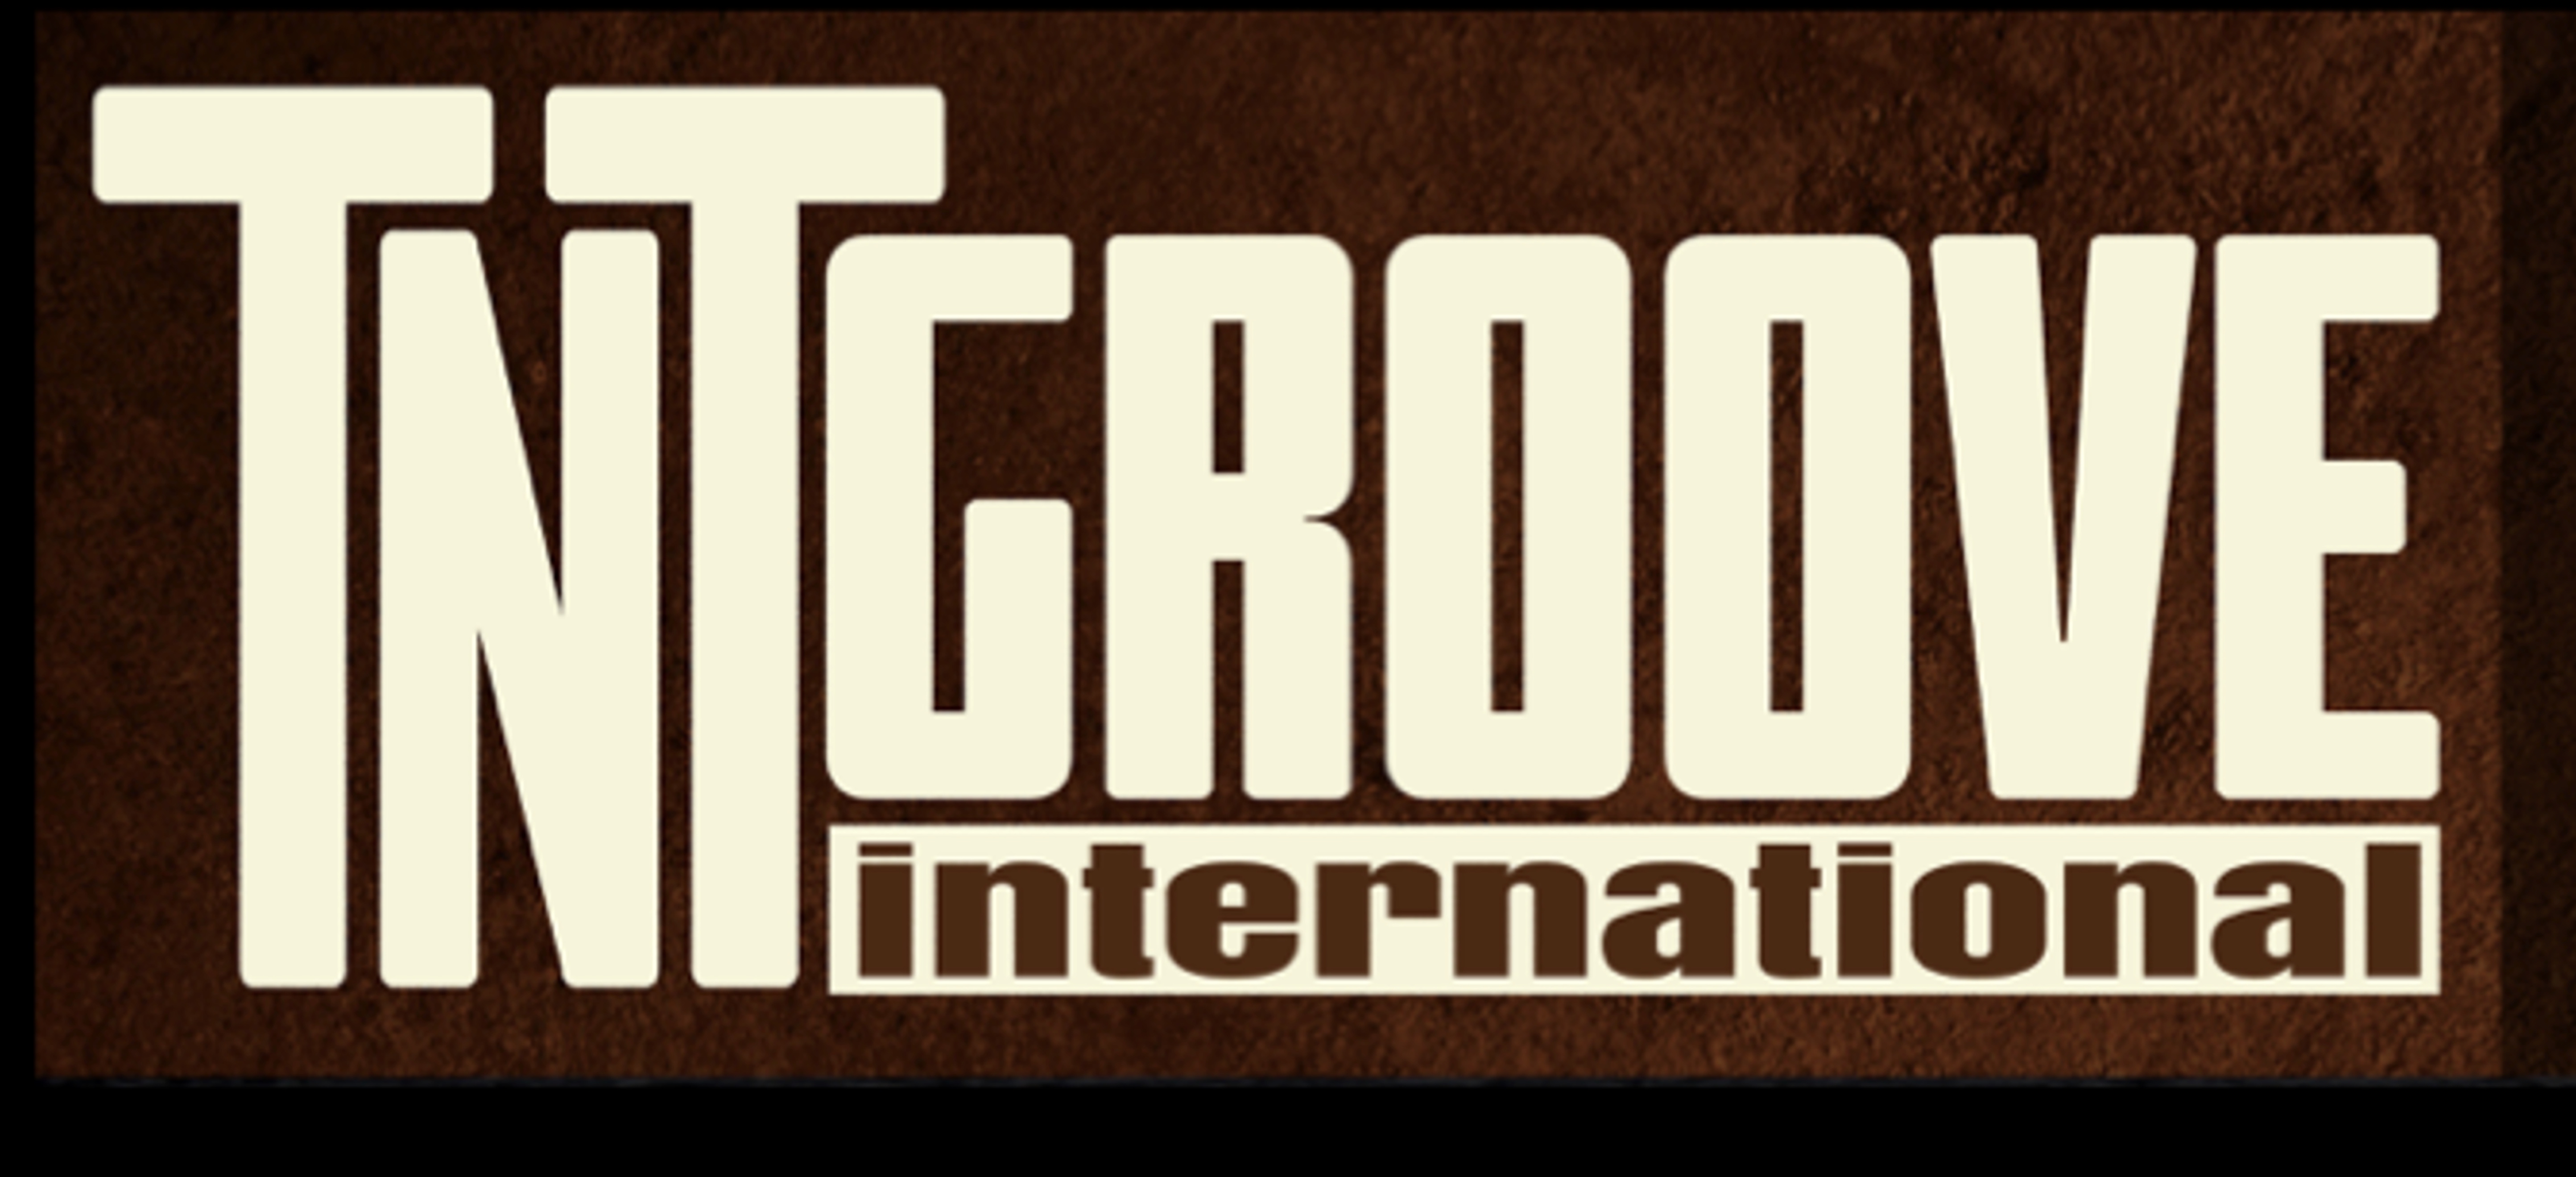 TNT Groove International